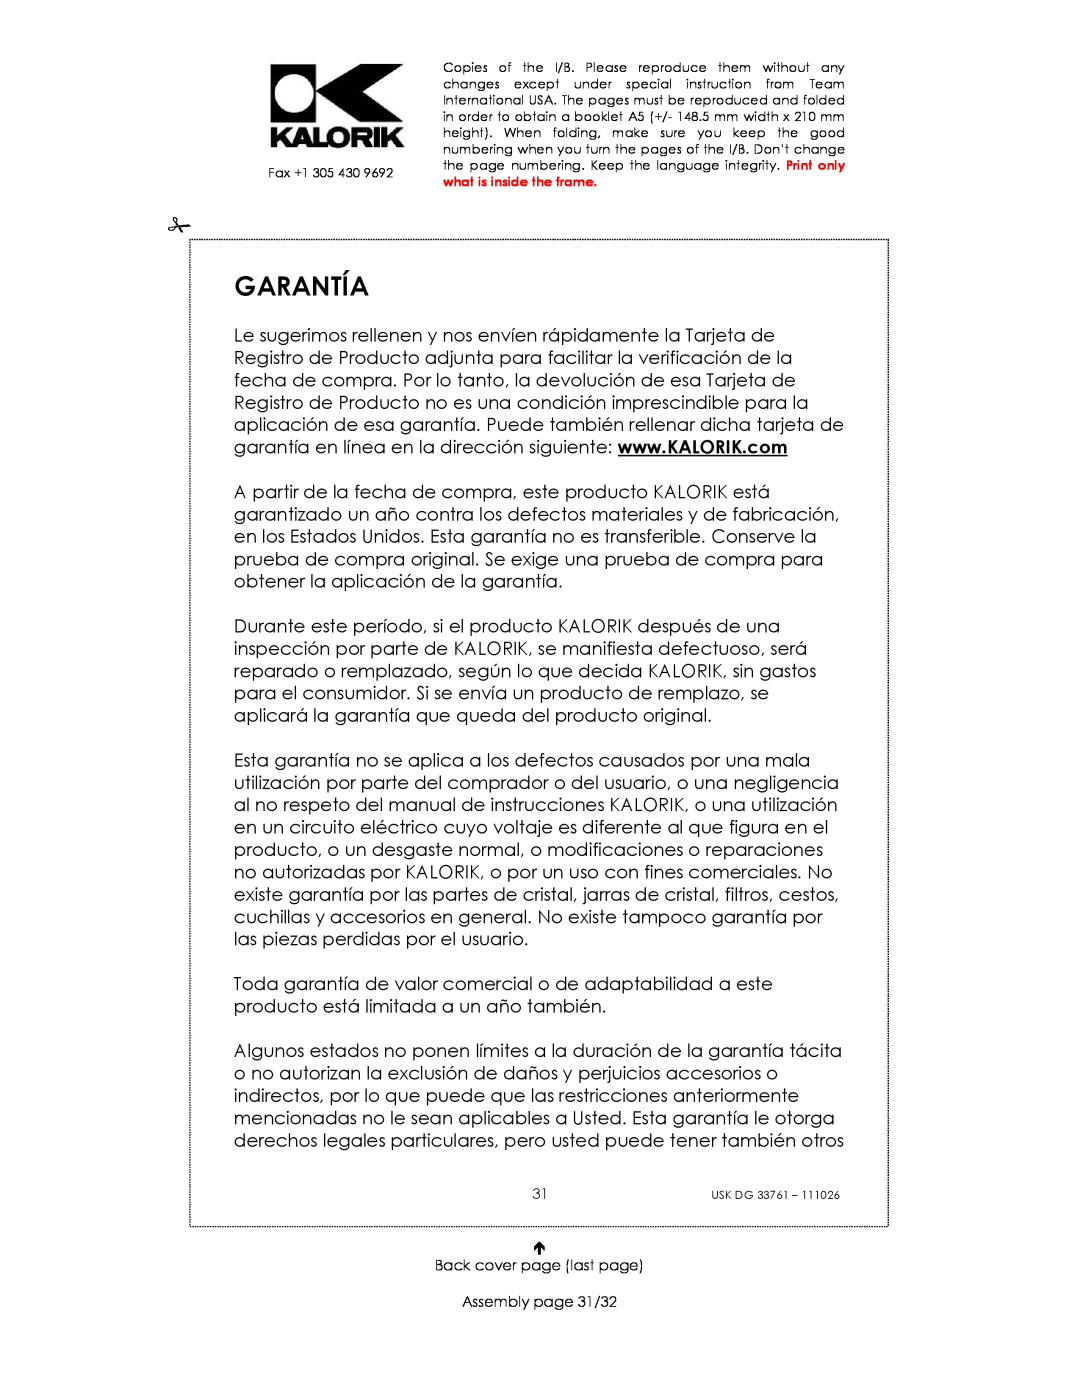 Kalorik USK DG 33761 manual Garantía, Back cover page last page Assembly page 31/32 